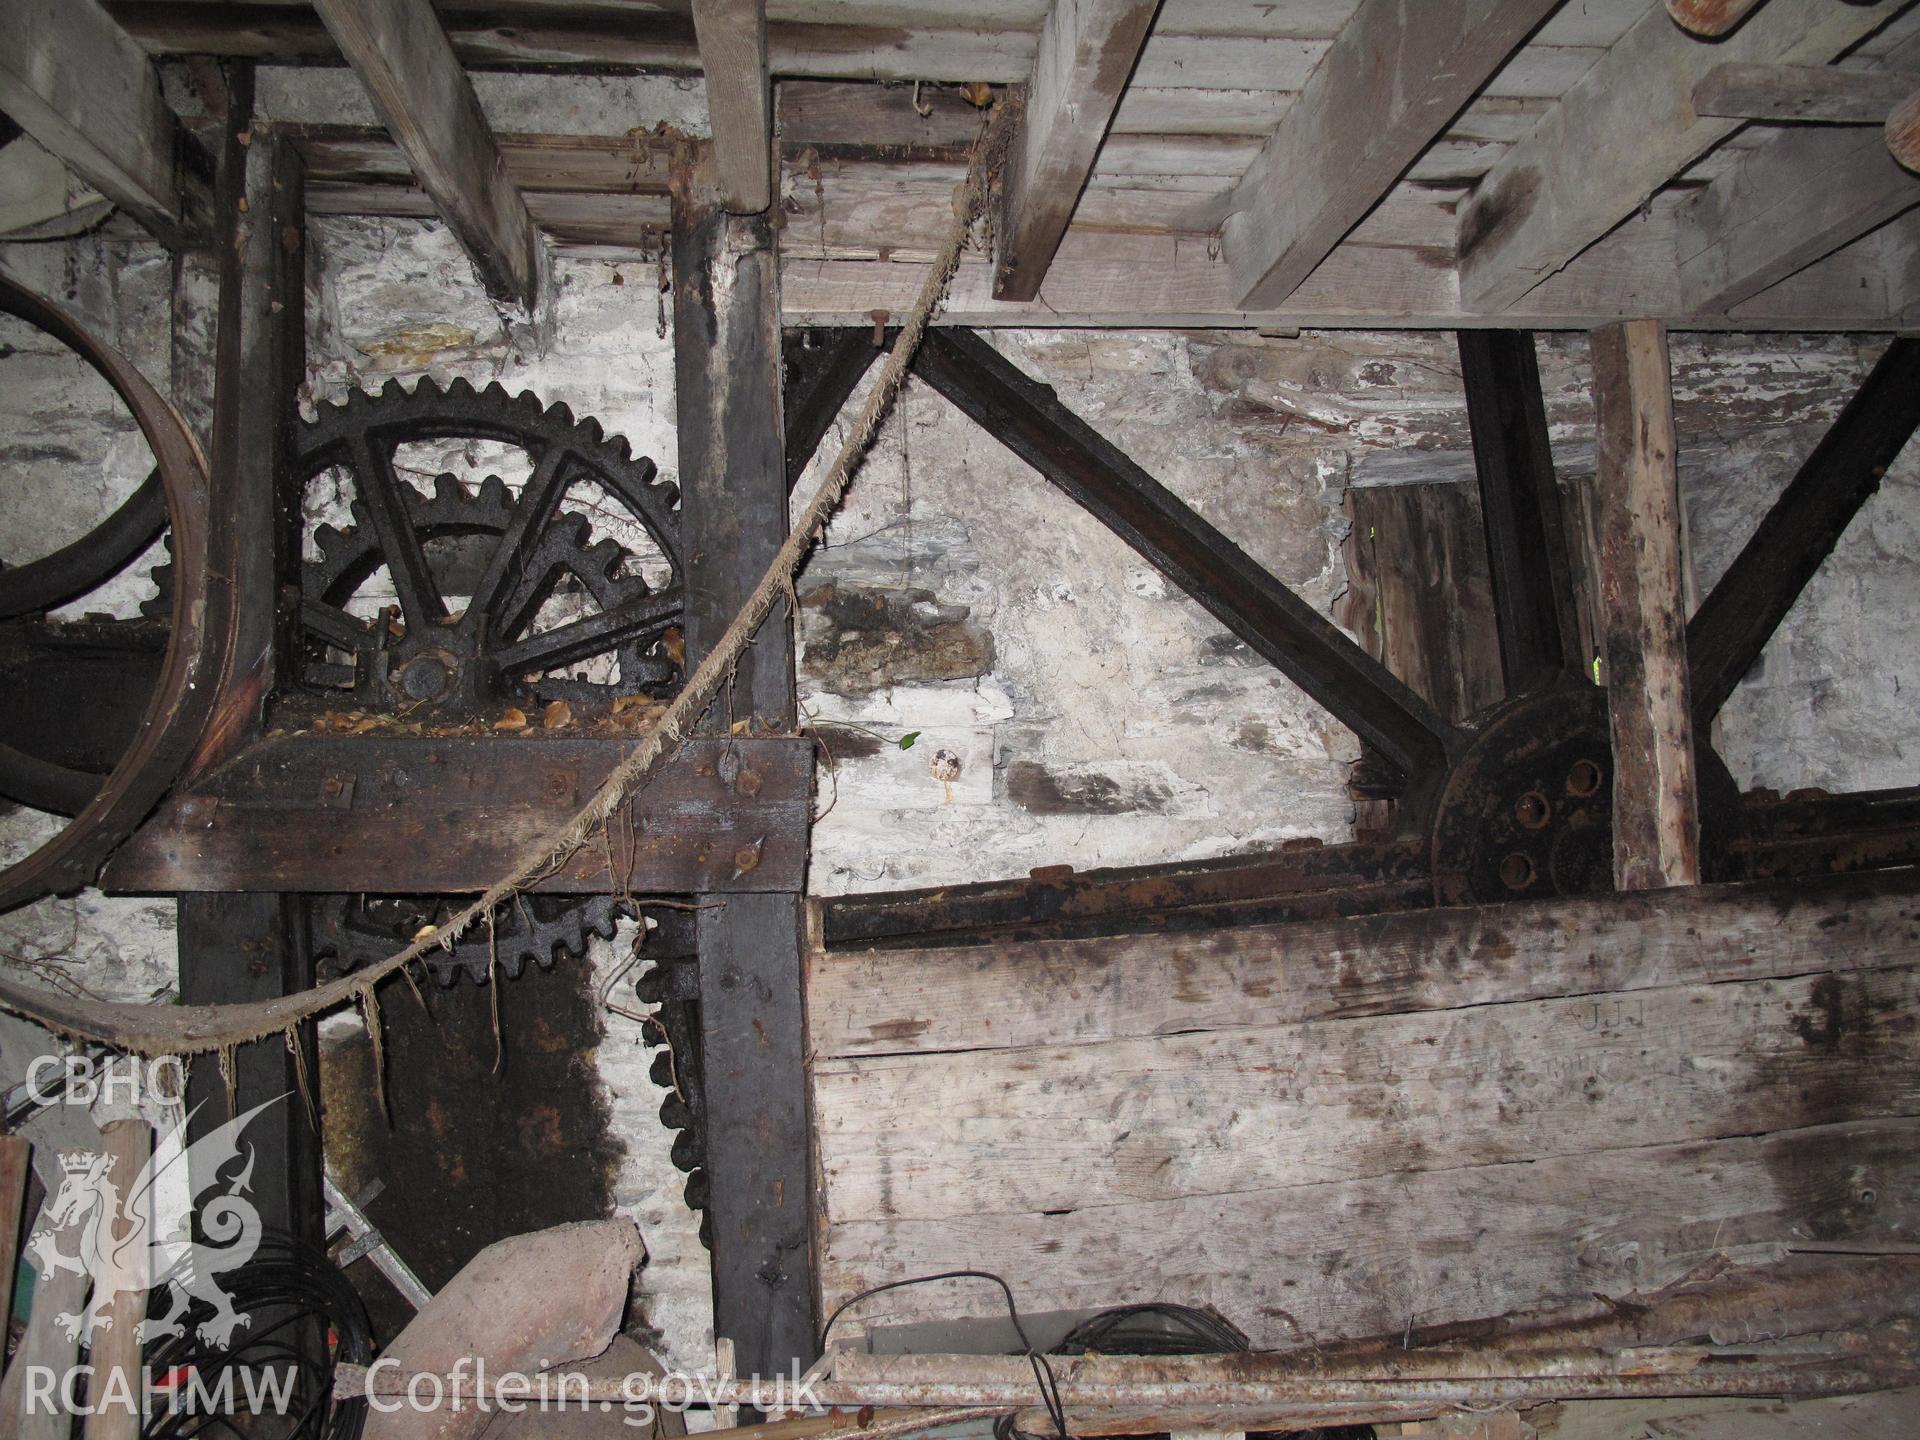 Main gear wheel and driving pinions at Ceulan Woollen Mill, Talybont.